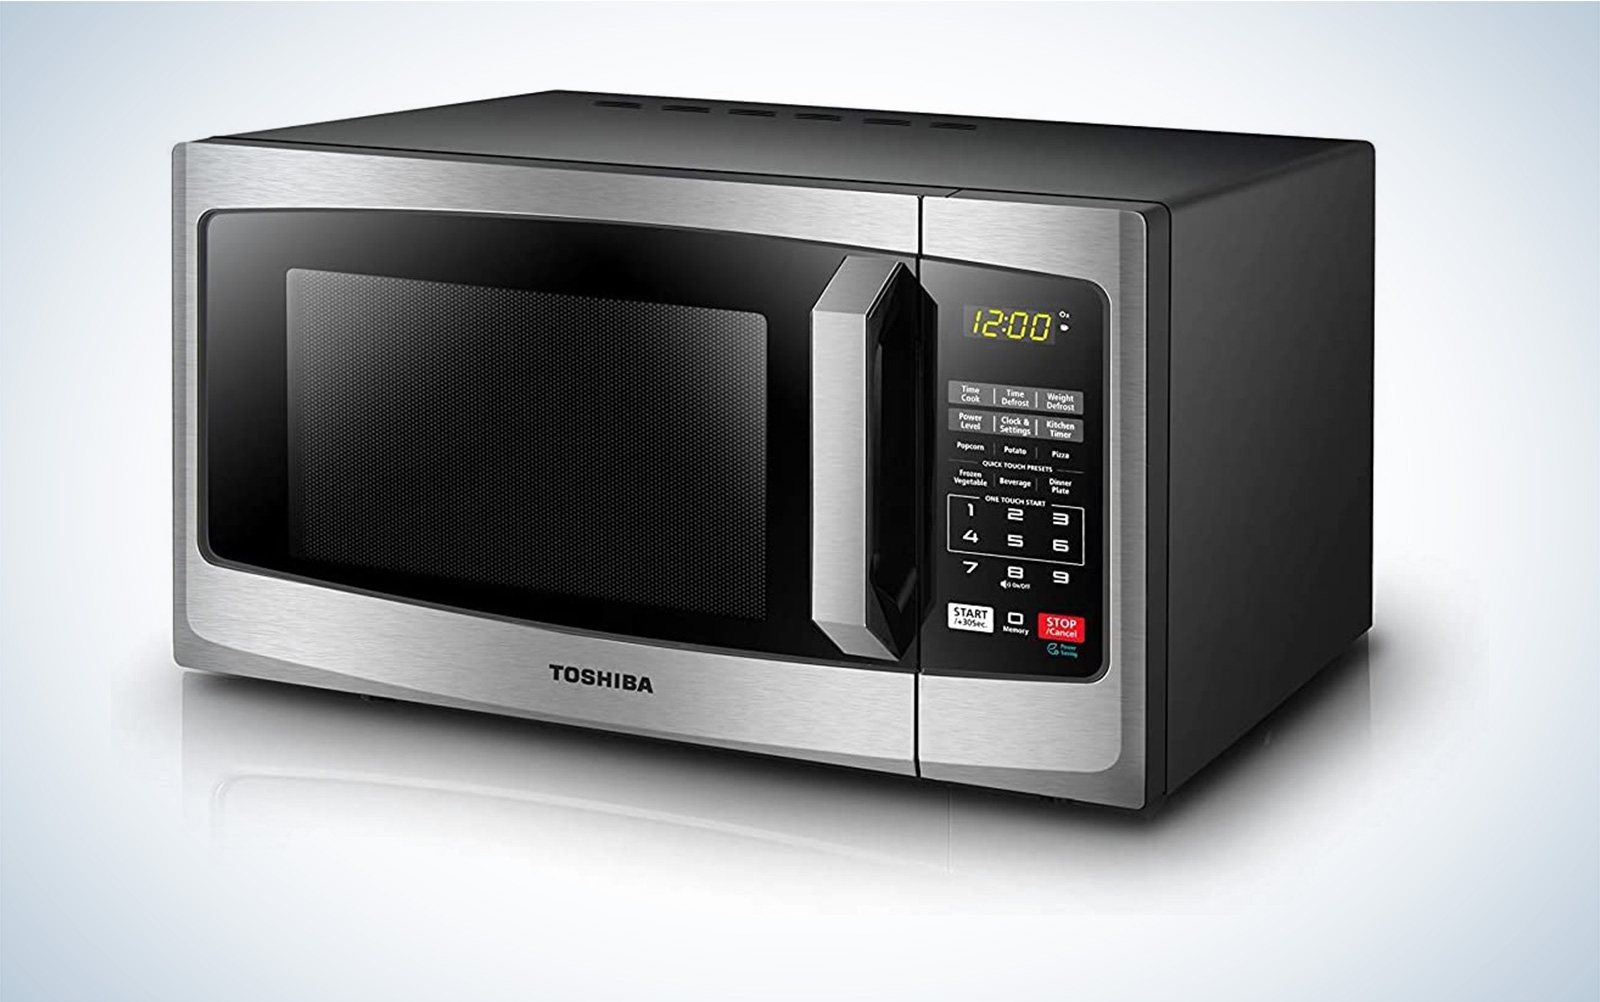 https://www.popsci.com/uploads/2023/03/13/best-countertop-microwave-ovens-toshiba.jpg?auto=webp&width=800&crop=16:10,offset-x50